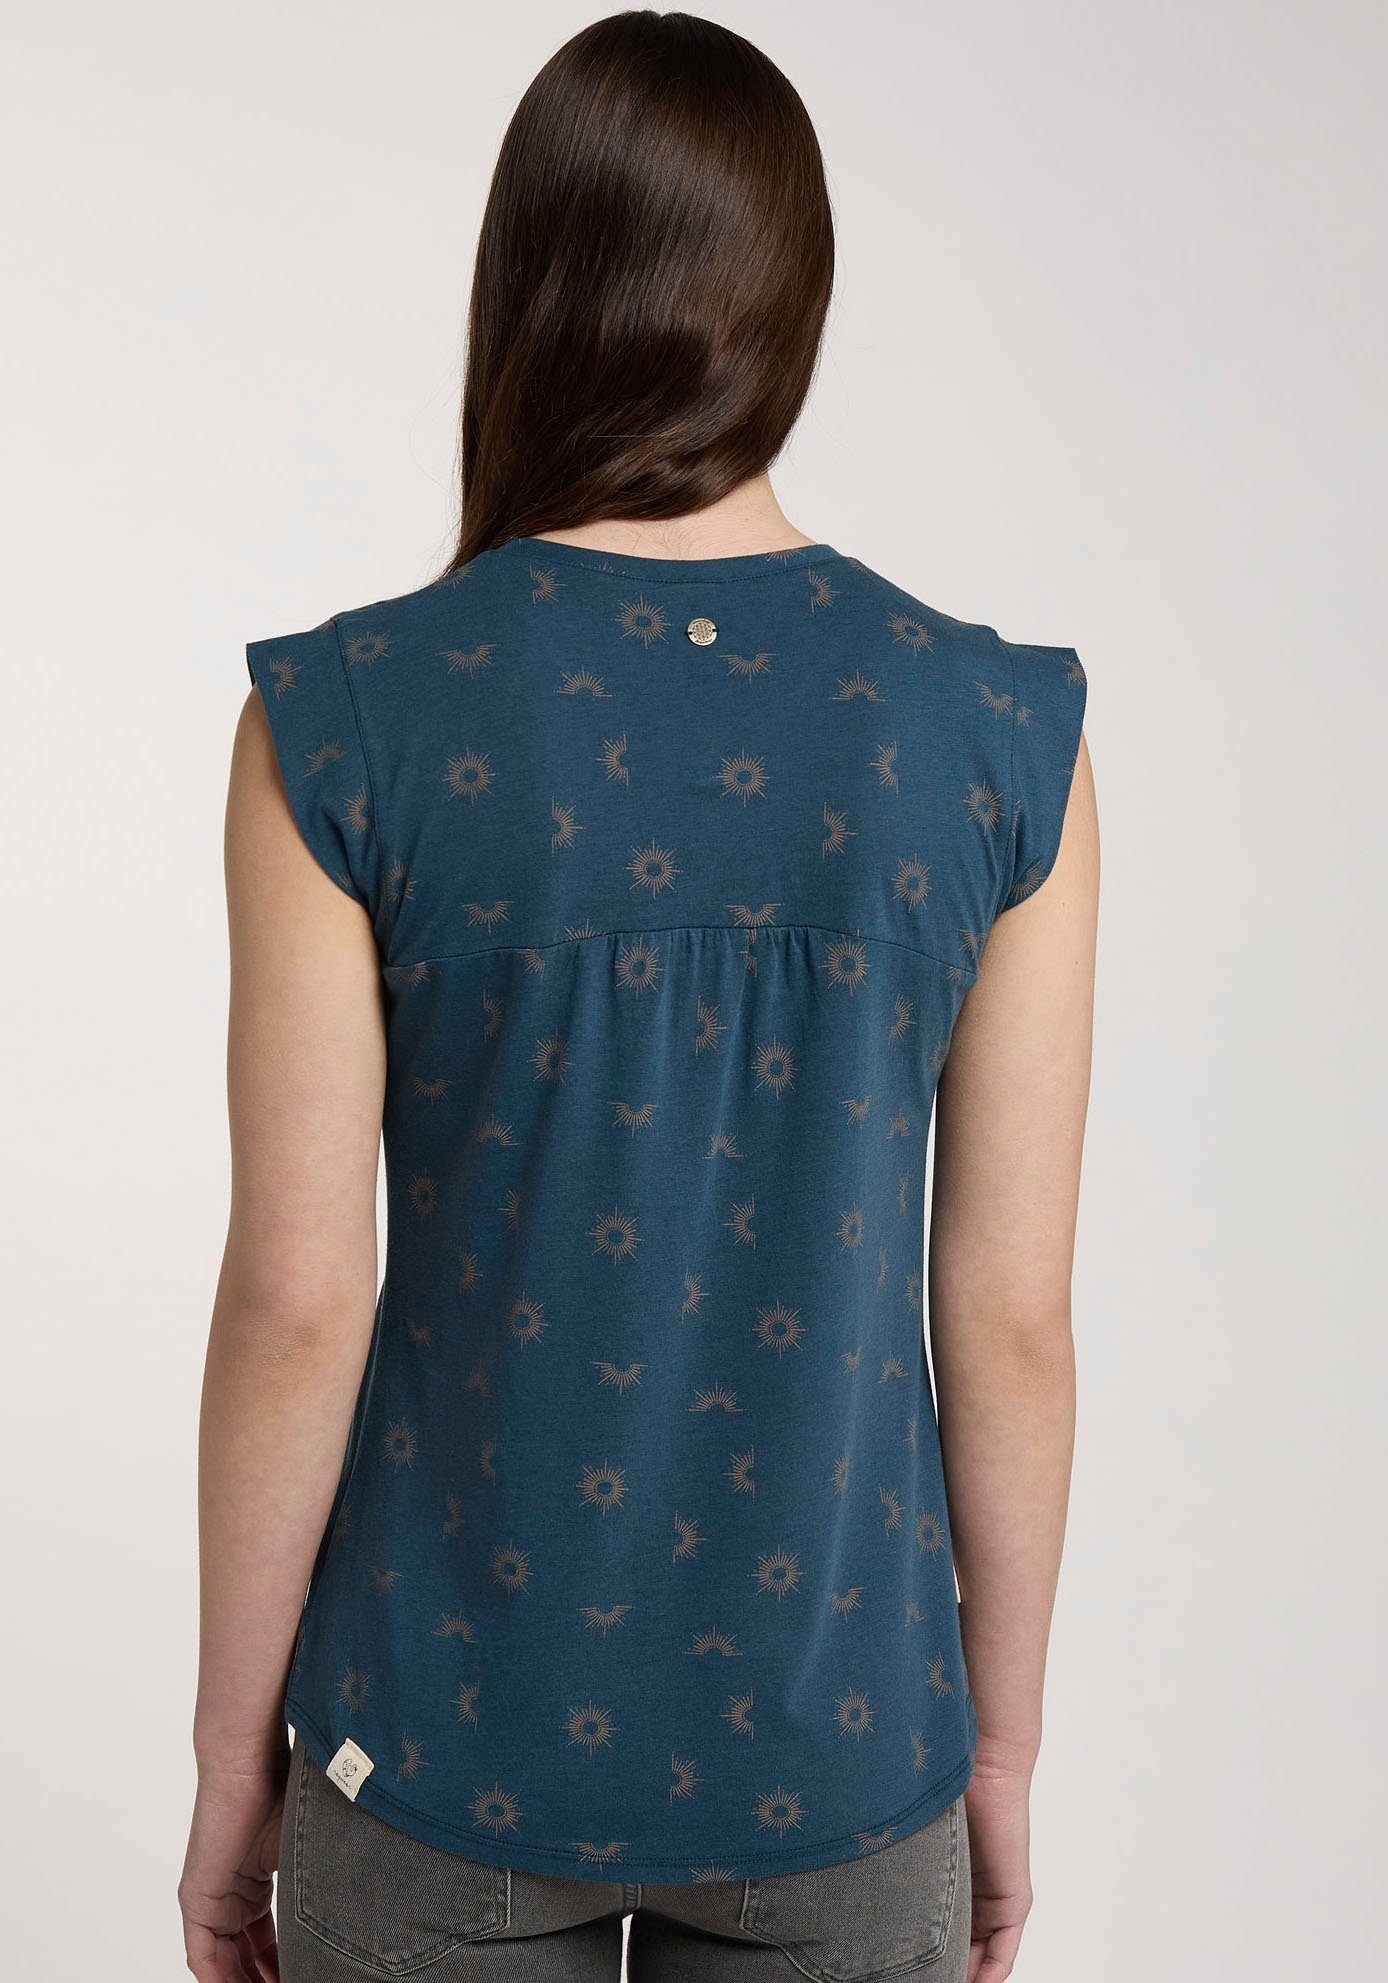 ZOFKA Ragwear PETROL Kurzarmshirt ORGANIC in stylischem Allover-Sunshine-Print